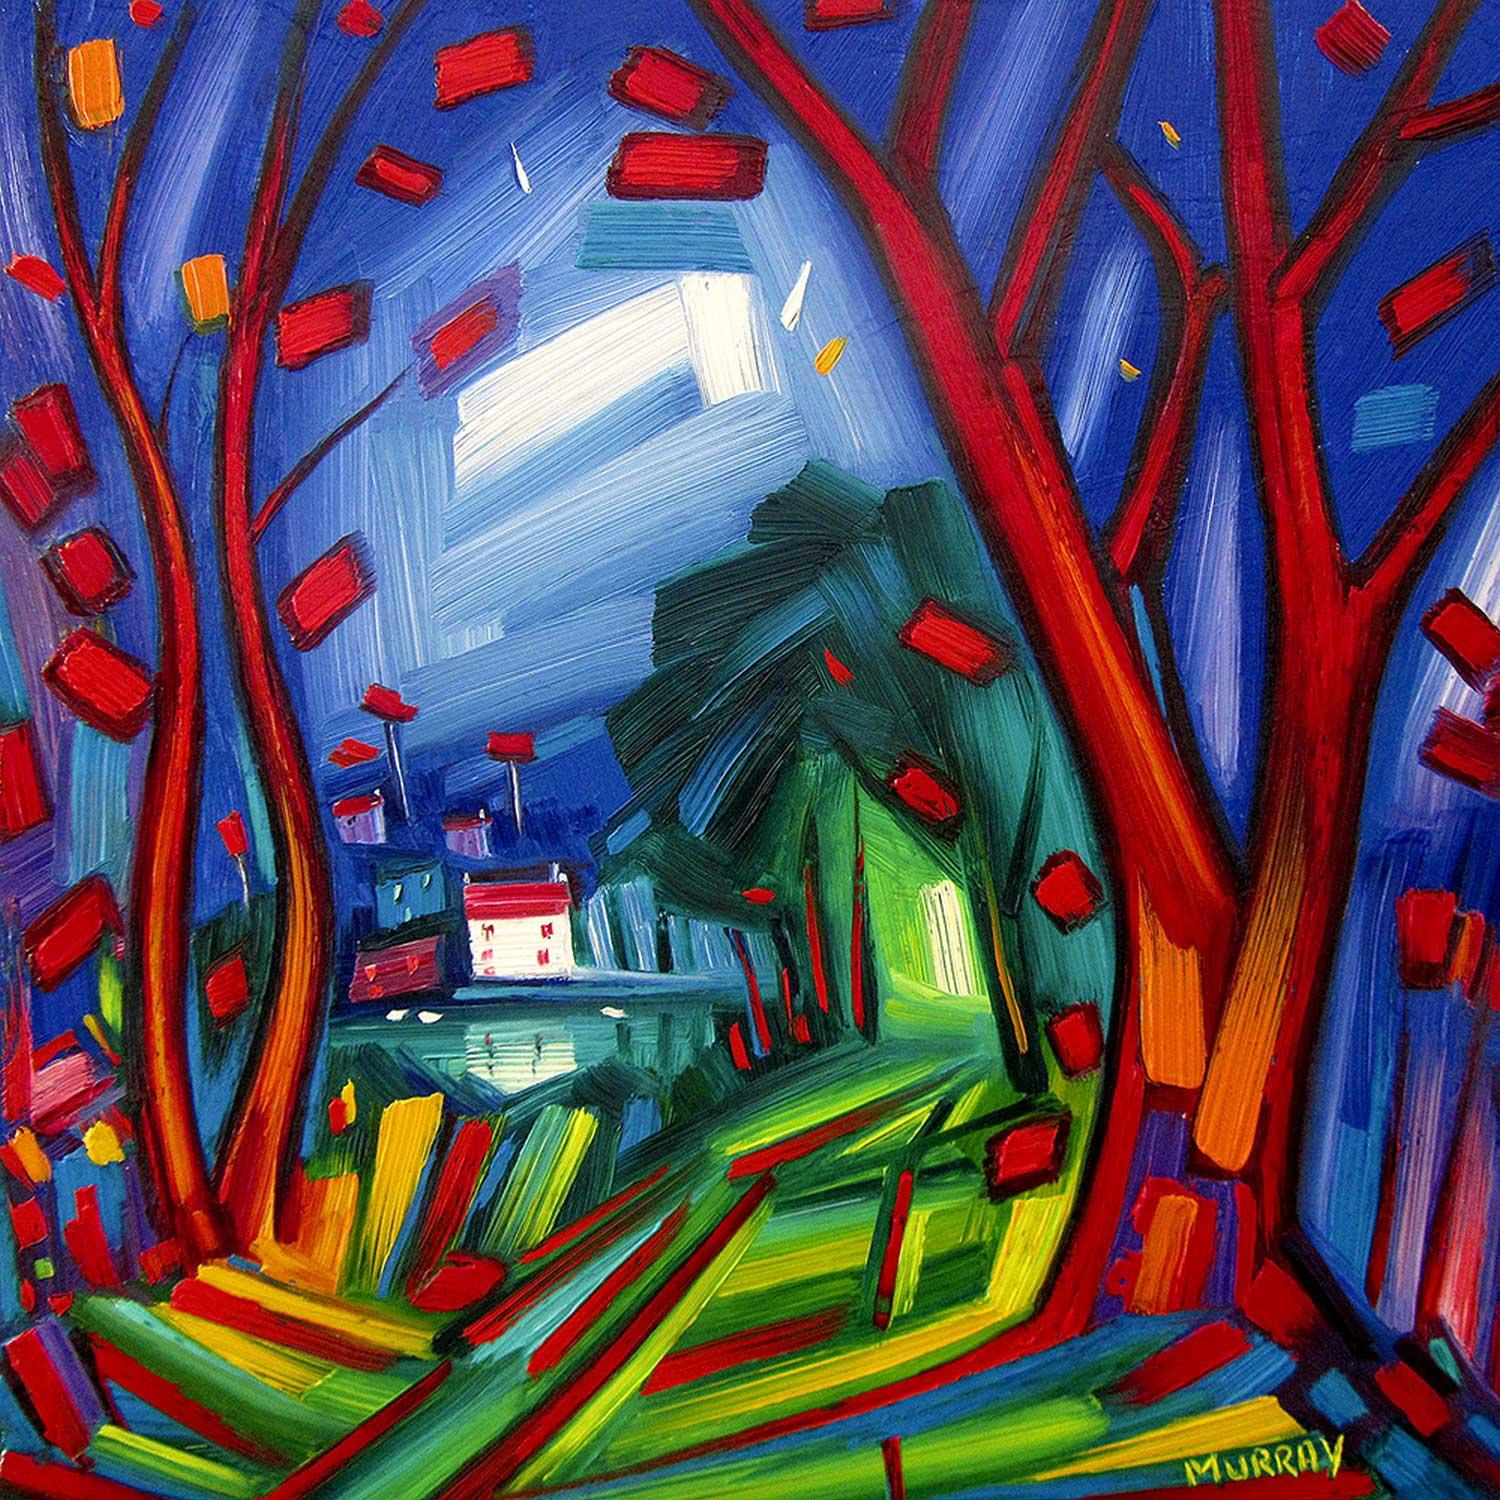 Occupation Lane by artist Raymond Murray